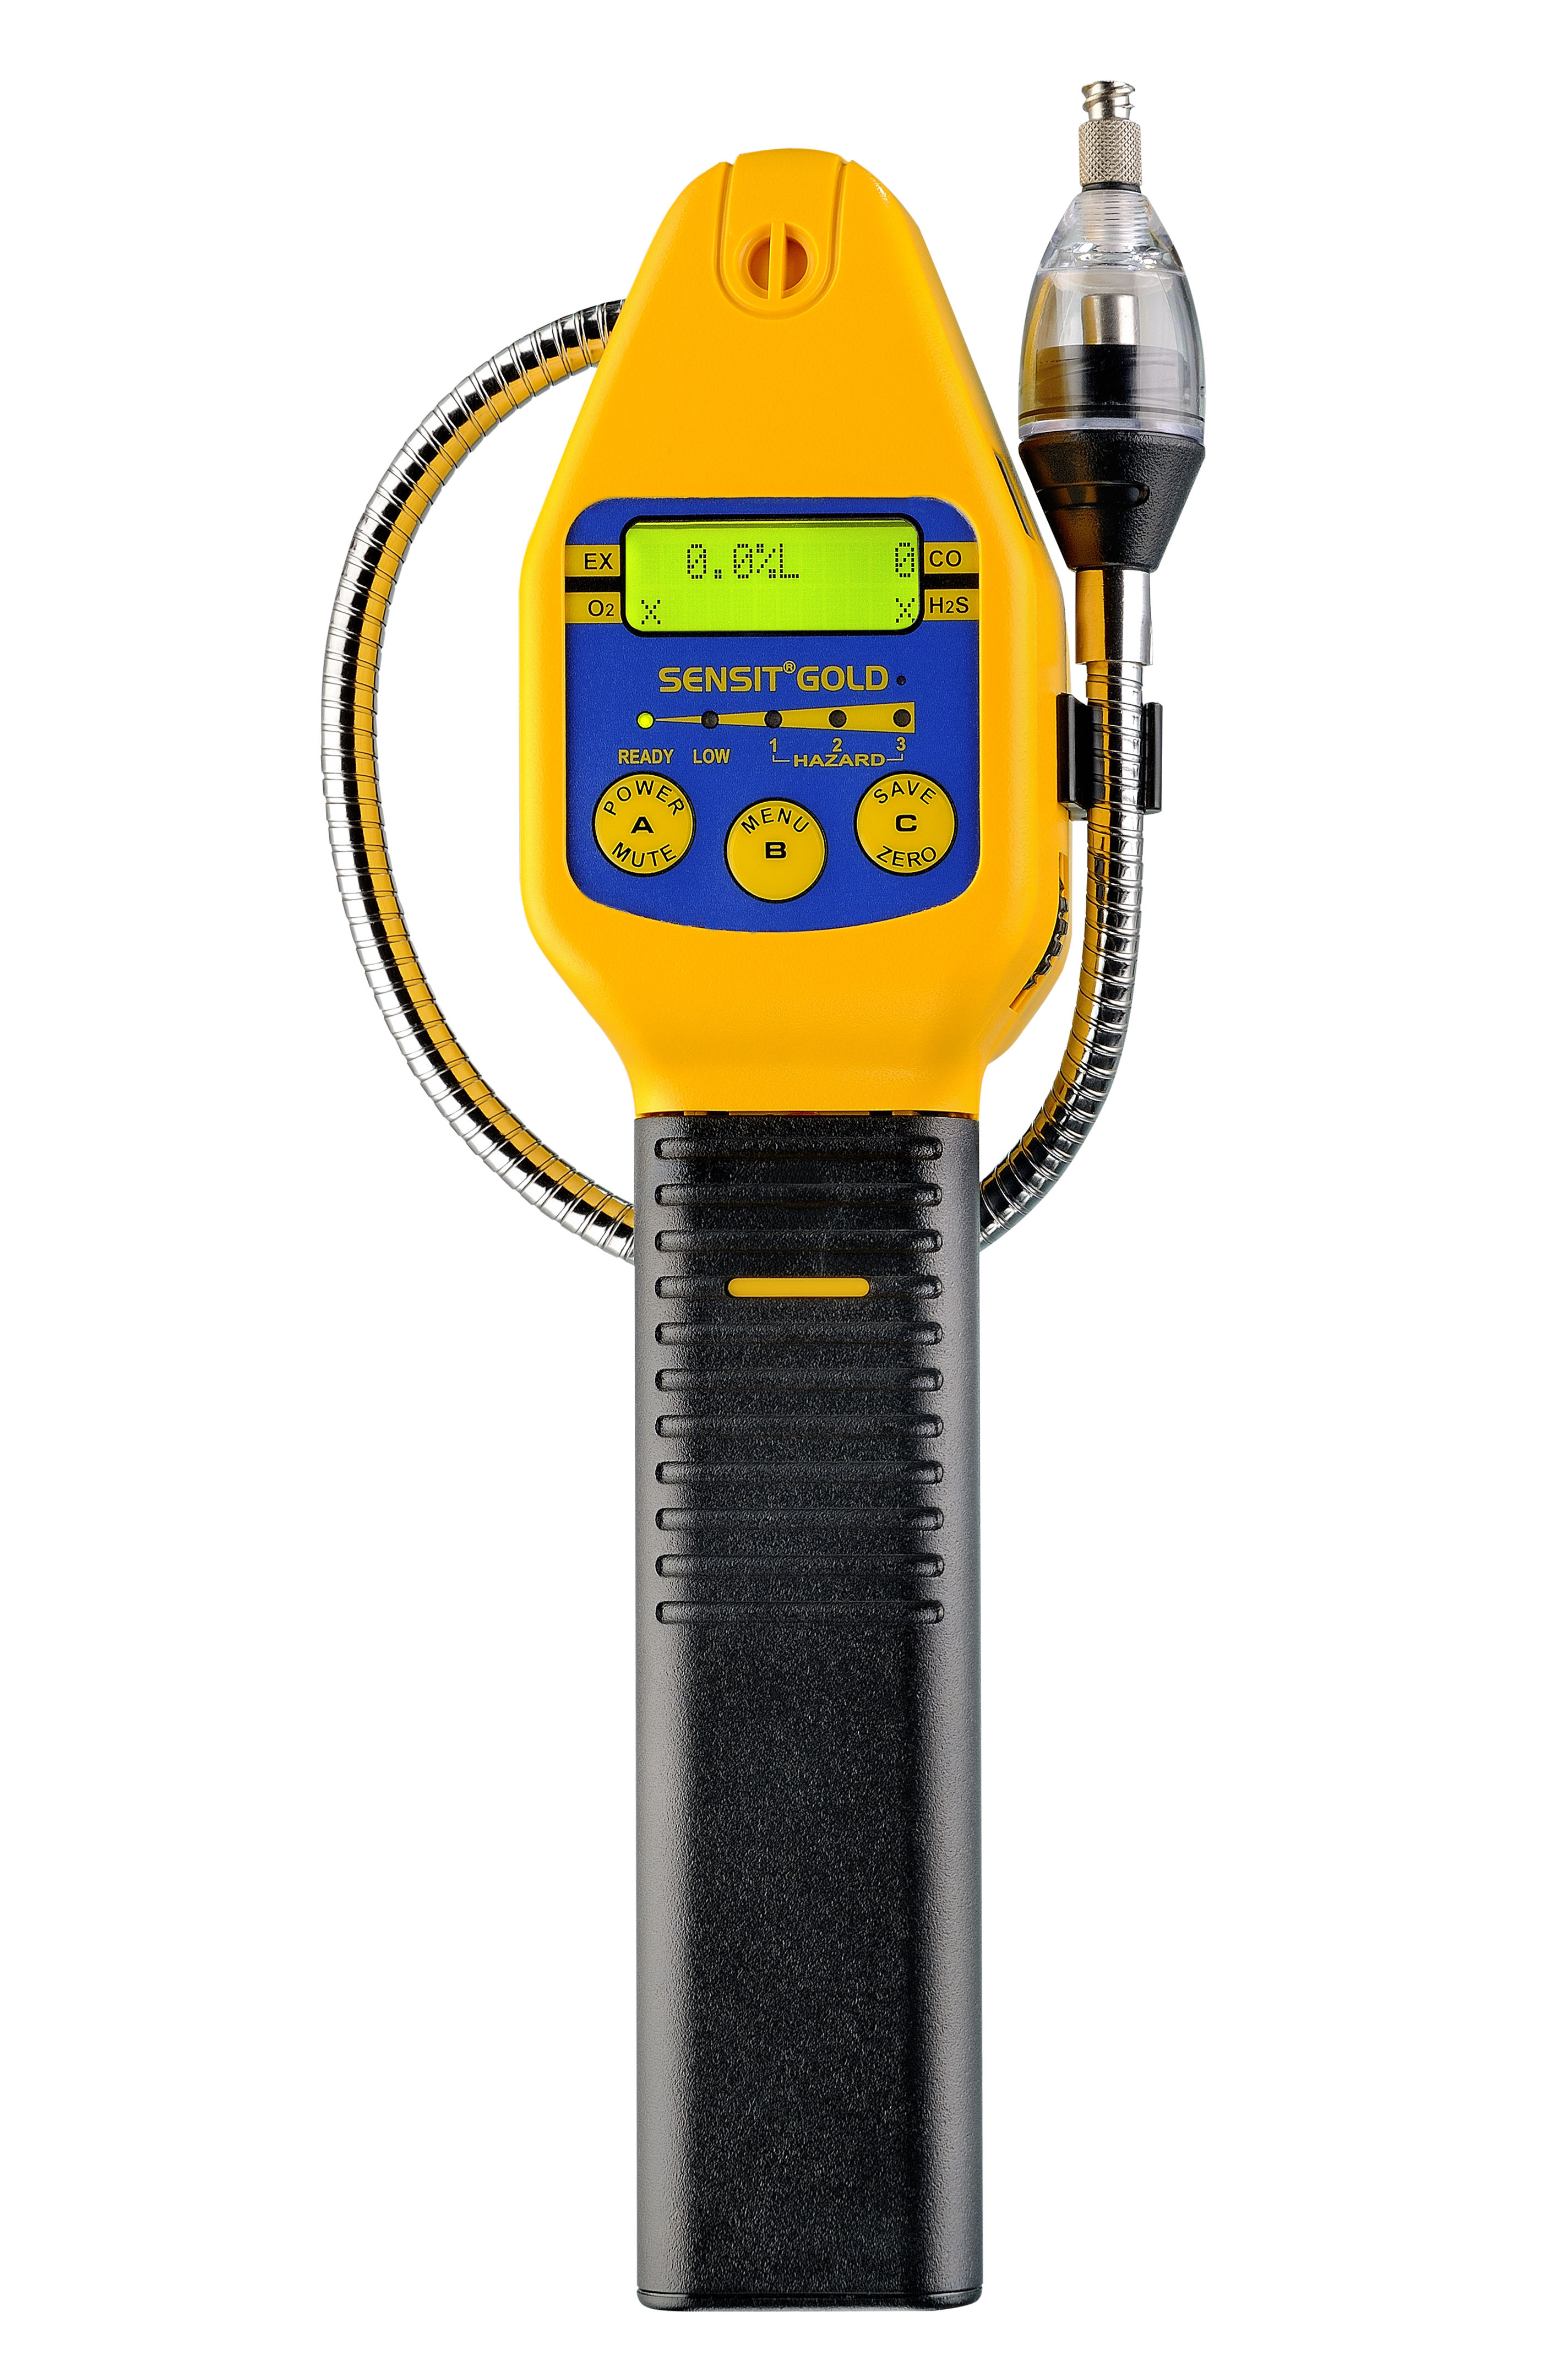 Sensit Gold Gas Leak Detection Instrument